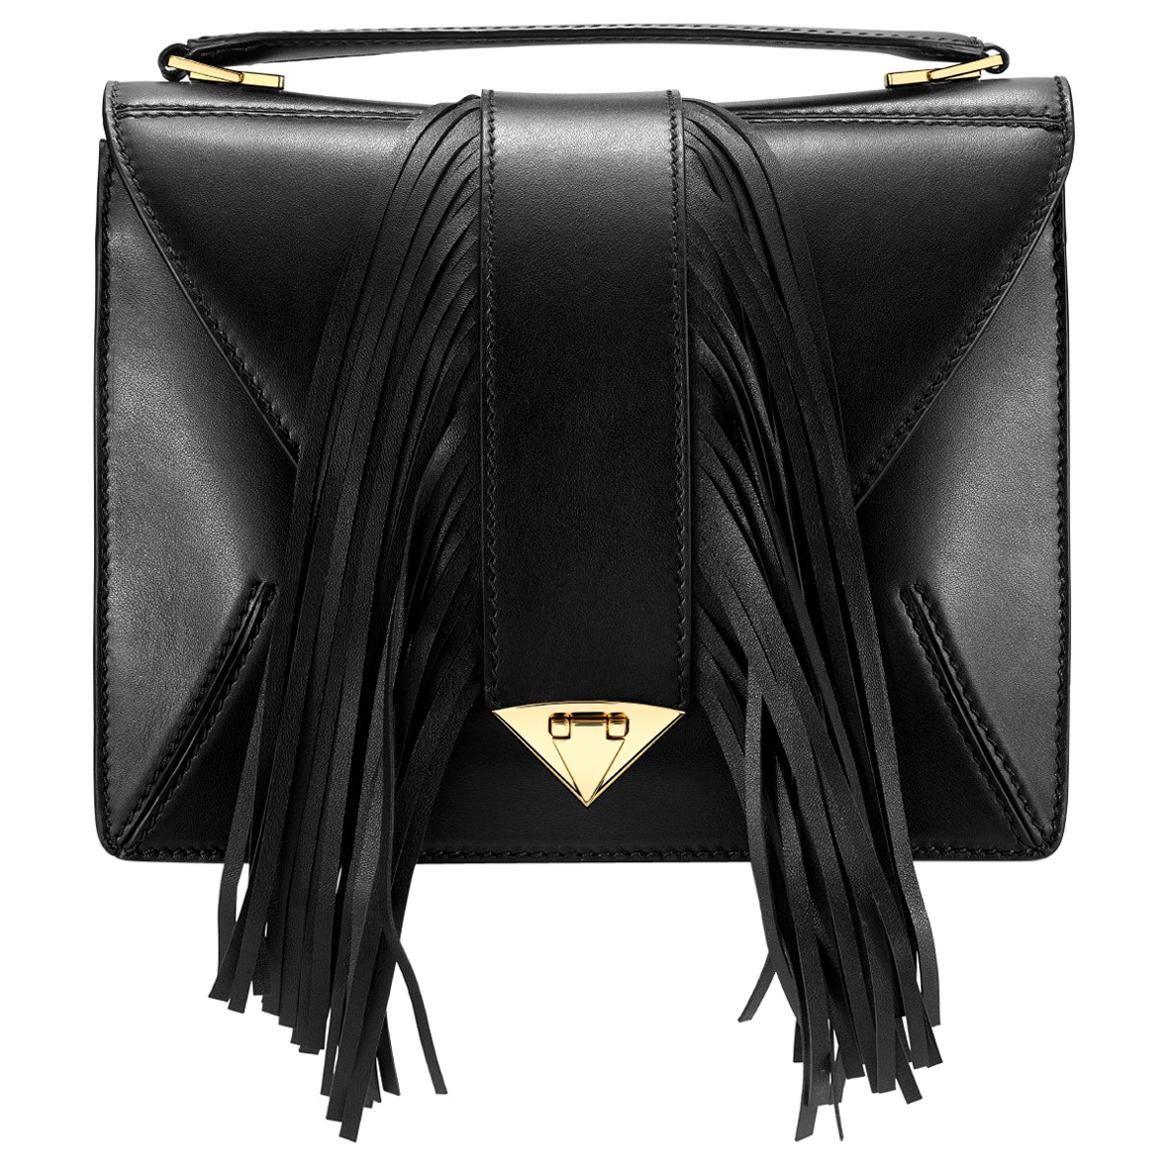 TYLER ELLIS Rita Handbag Large in Black Leather with Fringe and Gold Hardware